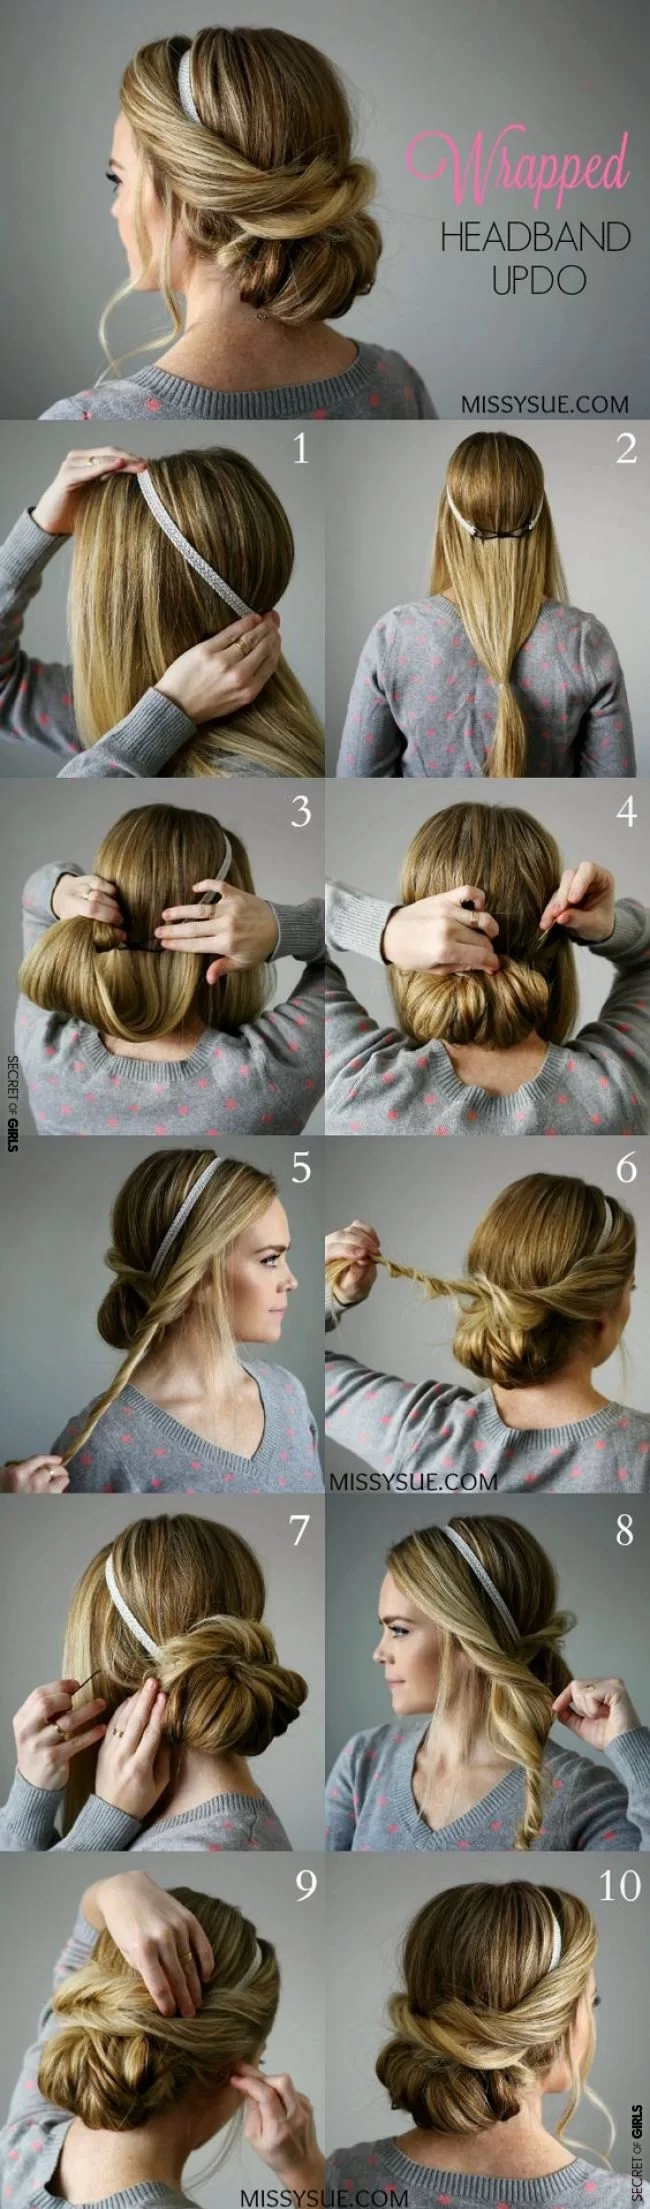 10 Easy Step by Step Hair Tutorials for Long, Medium, Short Hair